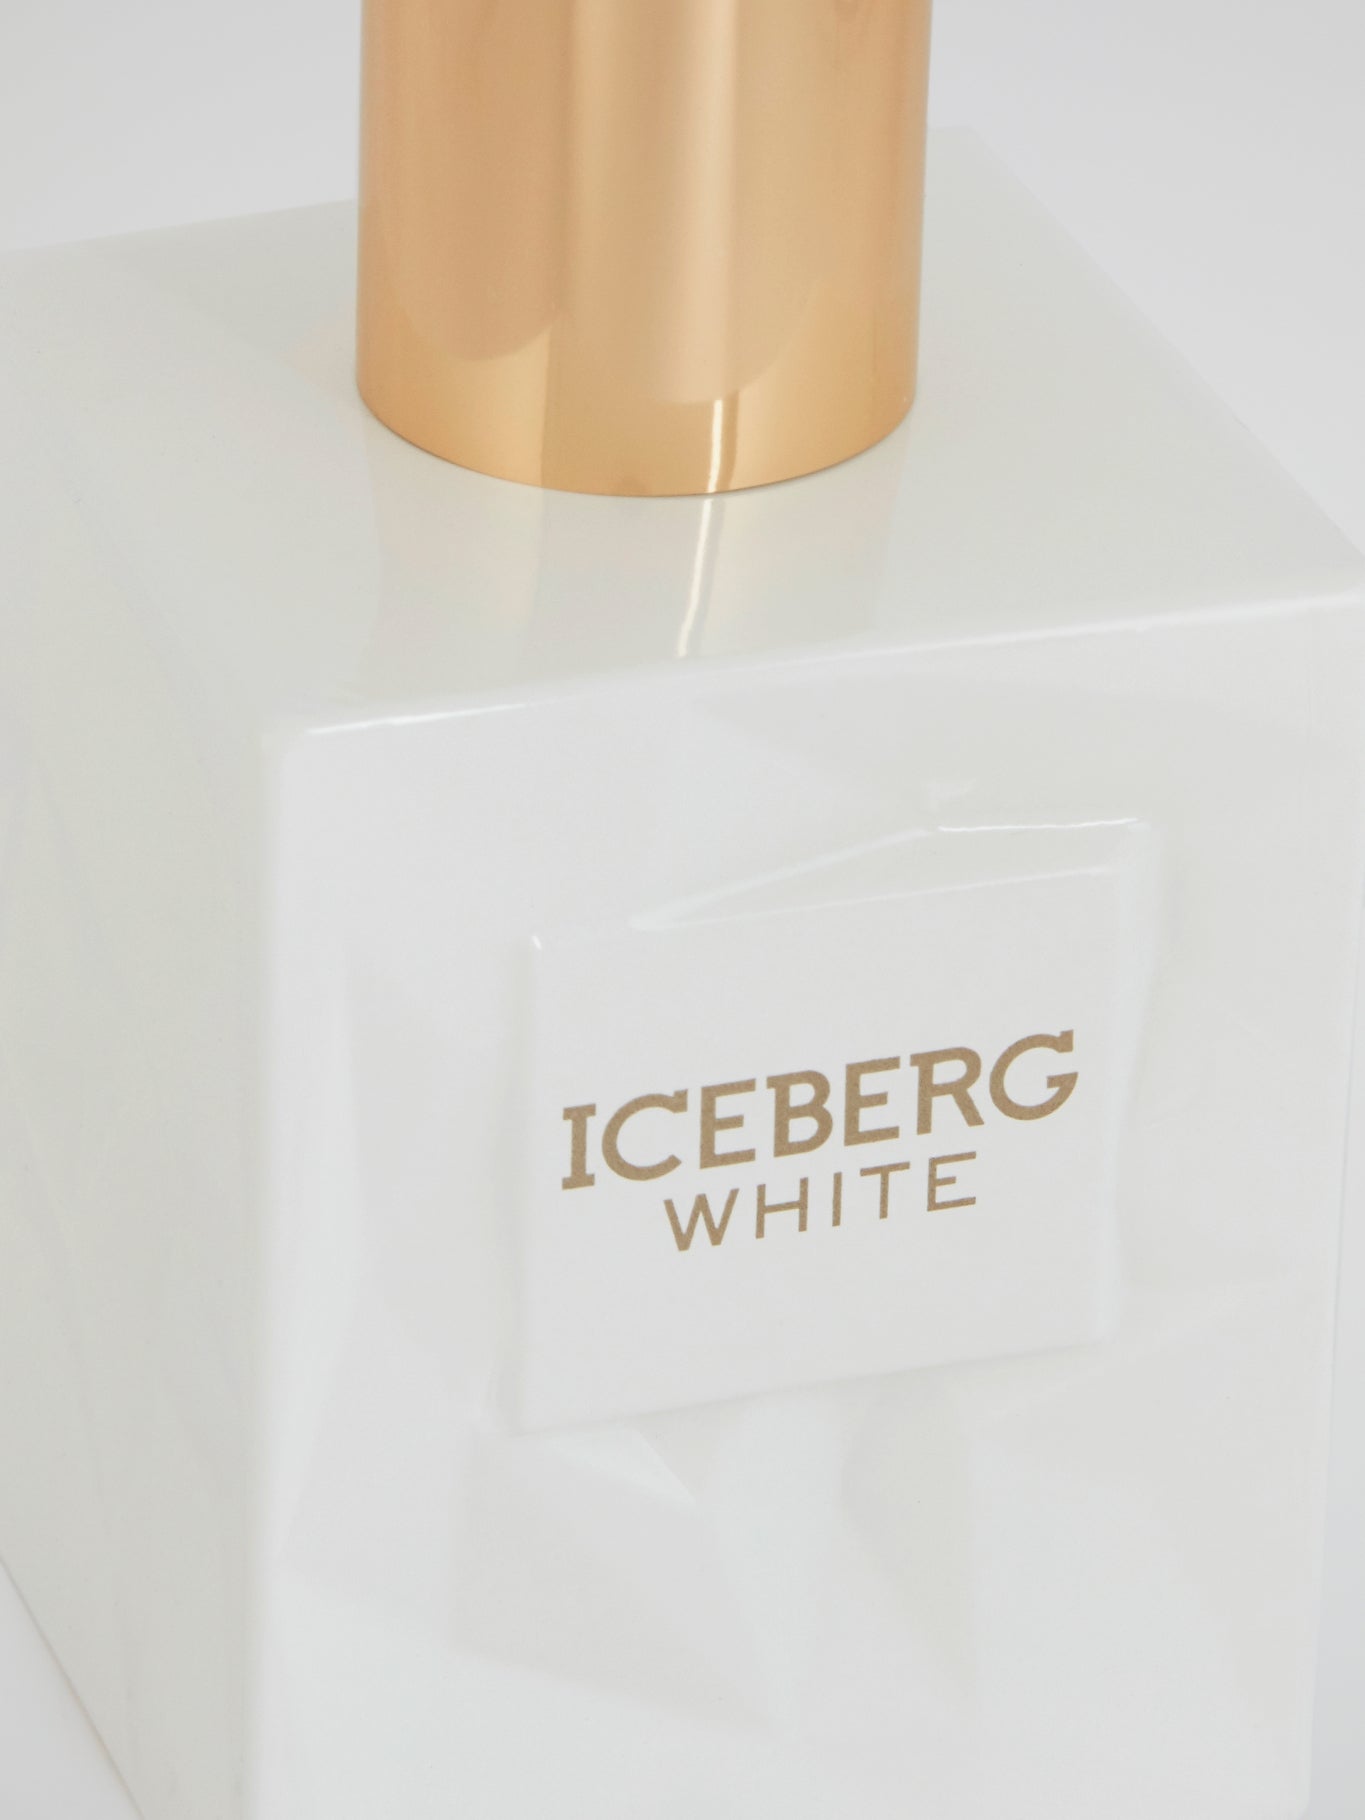 Iceberg White Eau de Toilette, 100ml